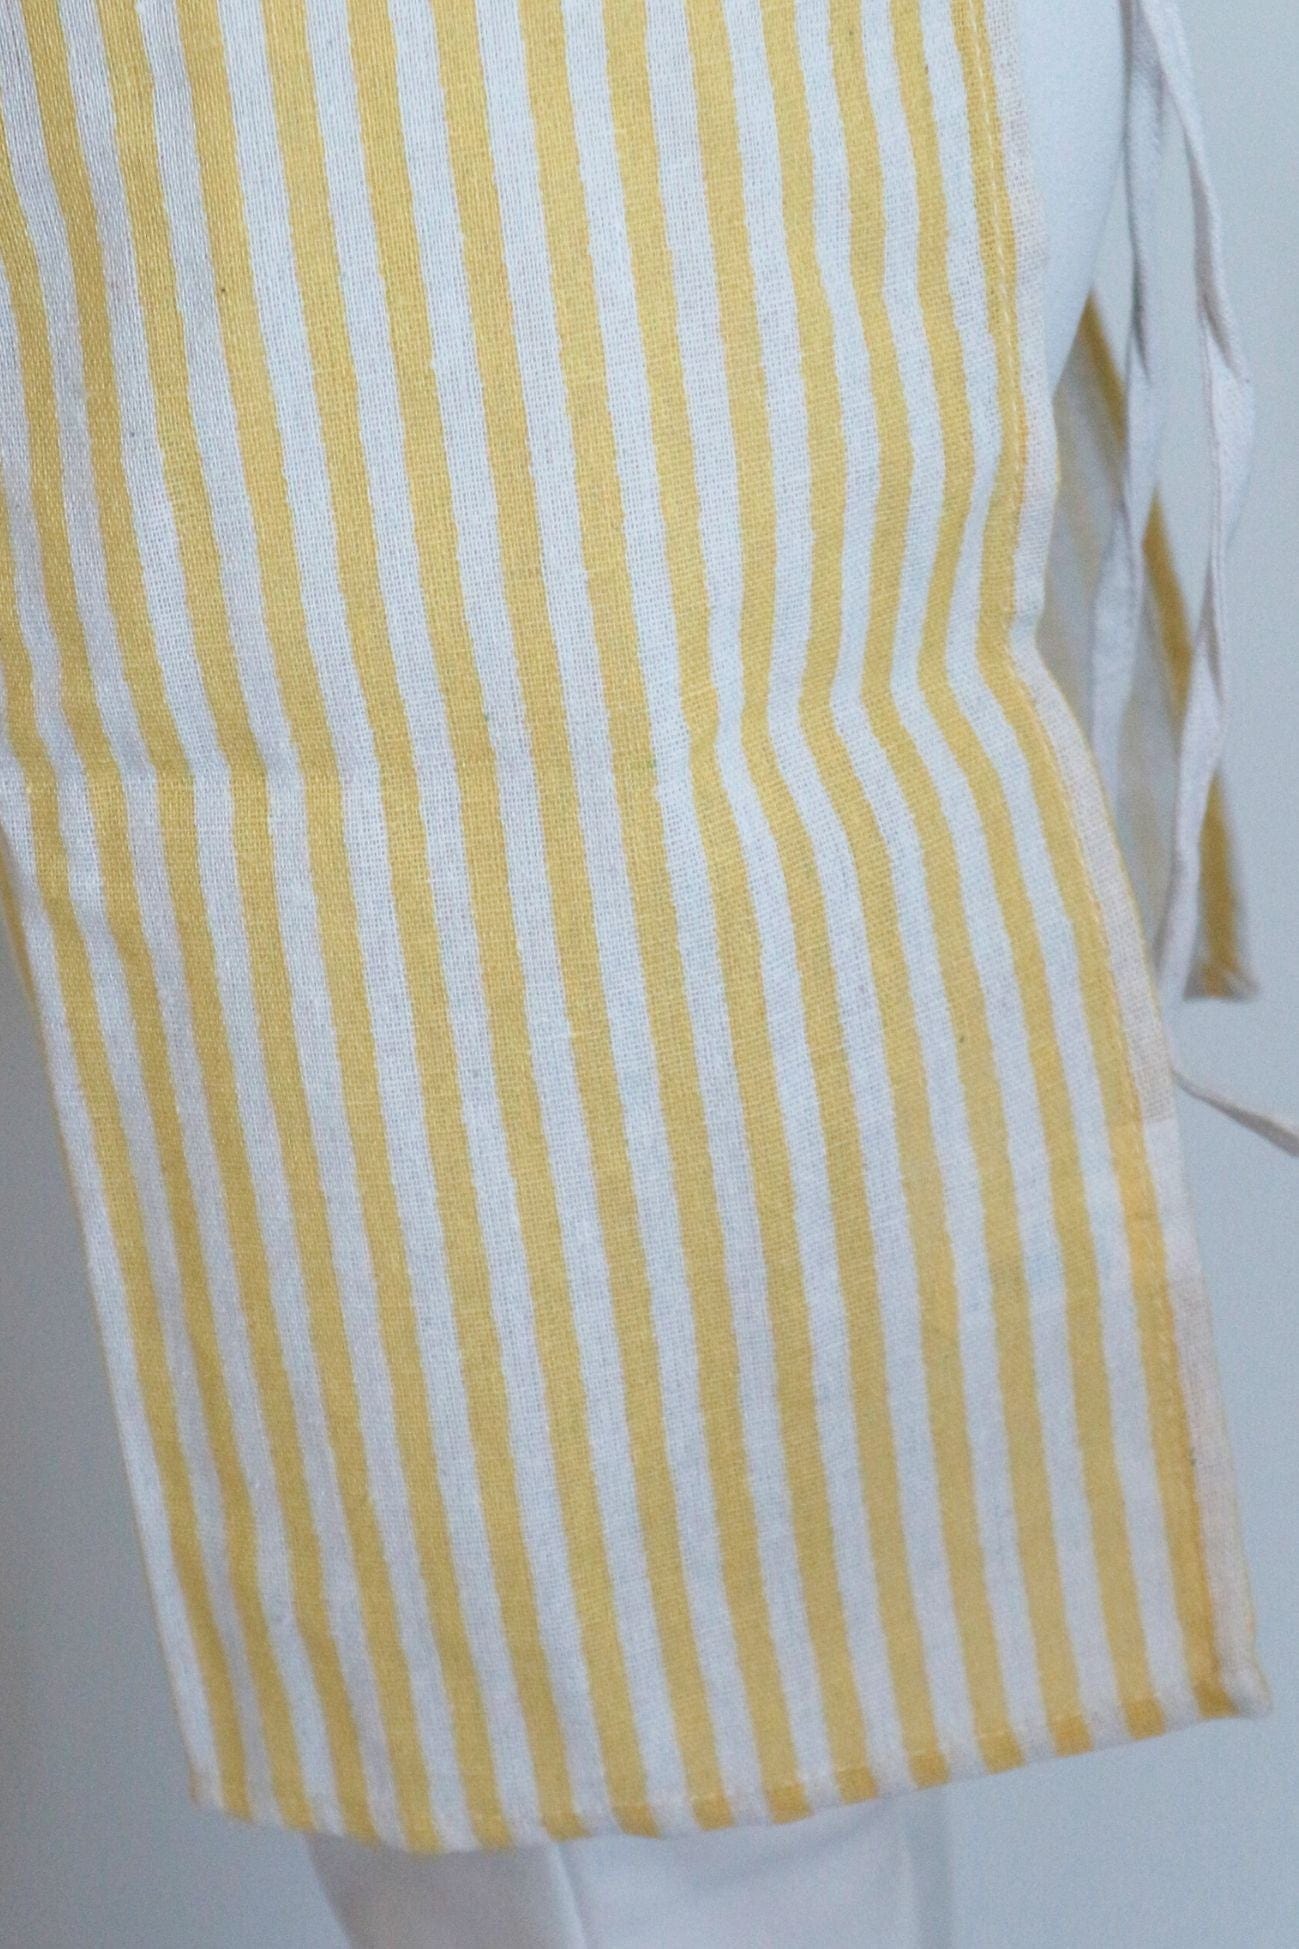 Item International Emilie Emilie - Grembiule giallo a righe con tasca | Item International